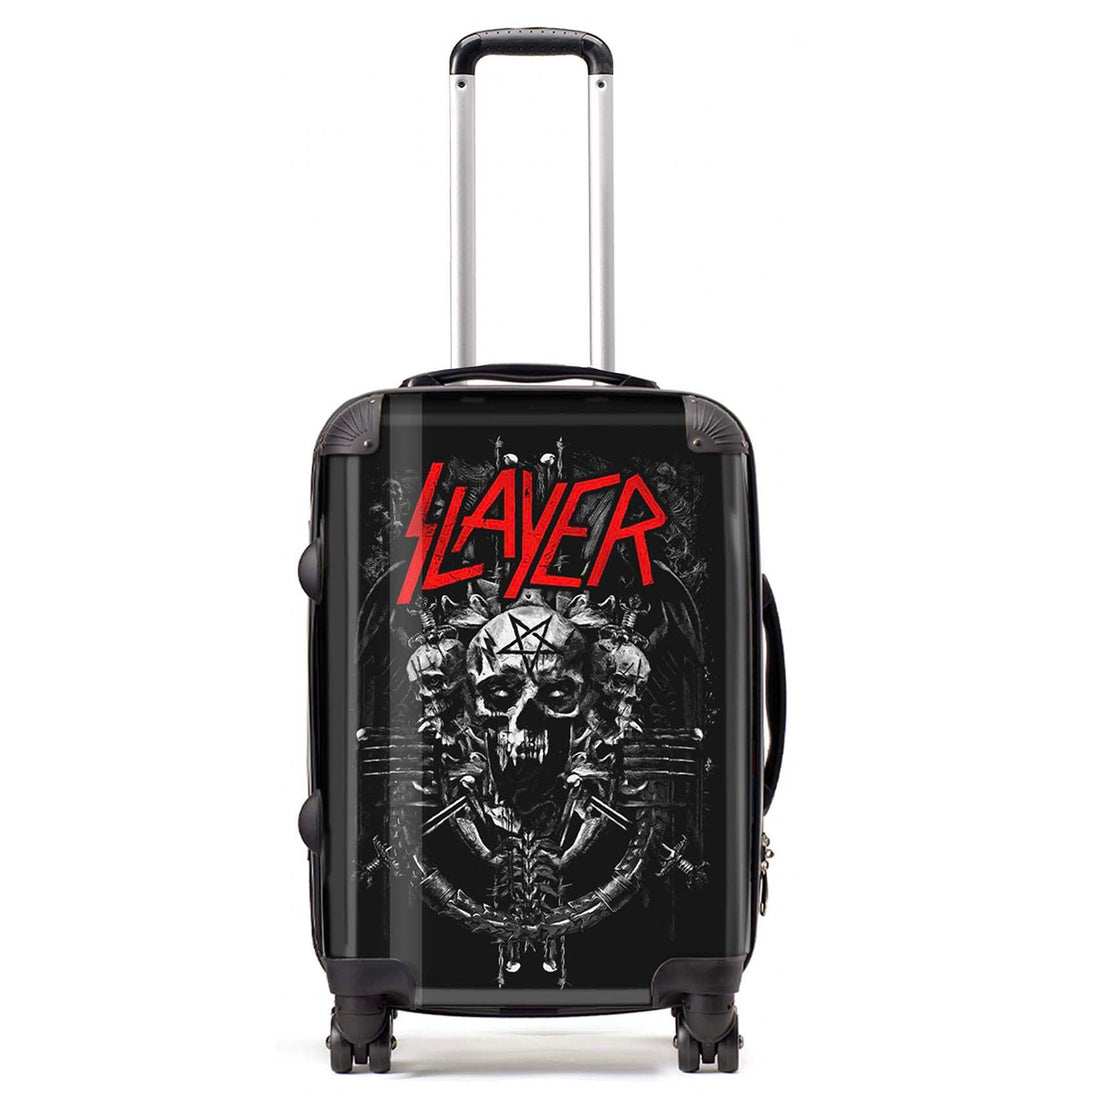 Rocksax Slayer Travel Bag Luggage - Reign of Fire